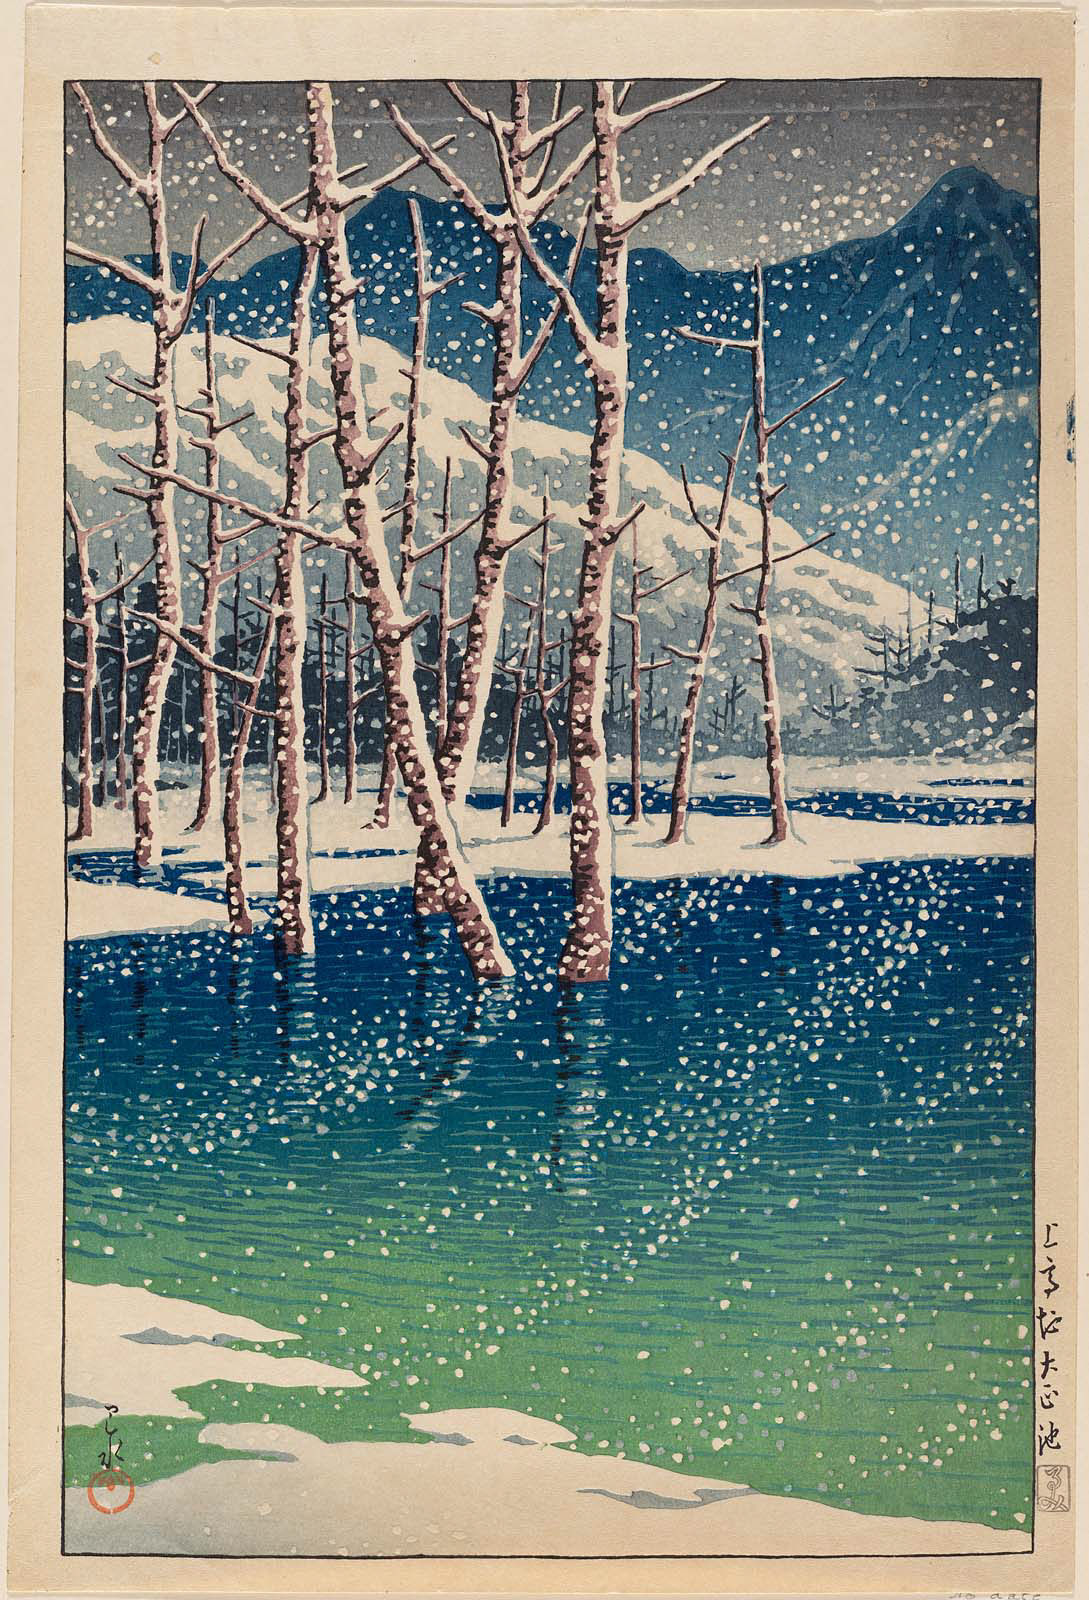 heaveninawildflower:
â€œ â€˜TaishÃ´ Pond at KamikÃ´chiâ€™ (circa 1927). Woodblock print by Kawase Hasui (1883â€“1957).
Image and text courtesy MFA Boston.
â€